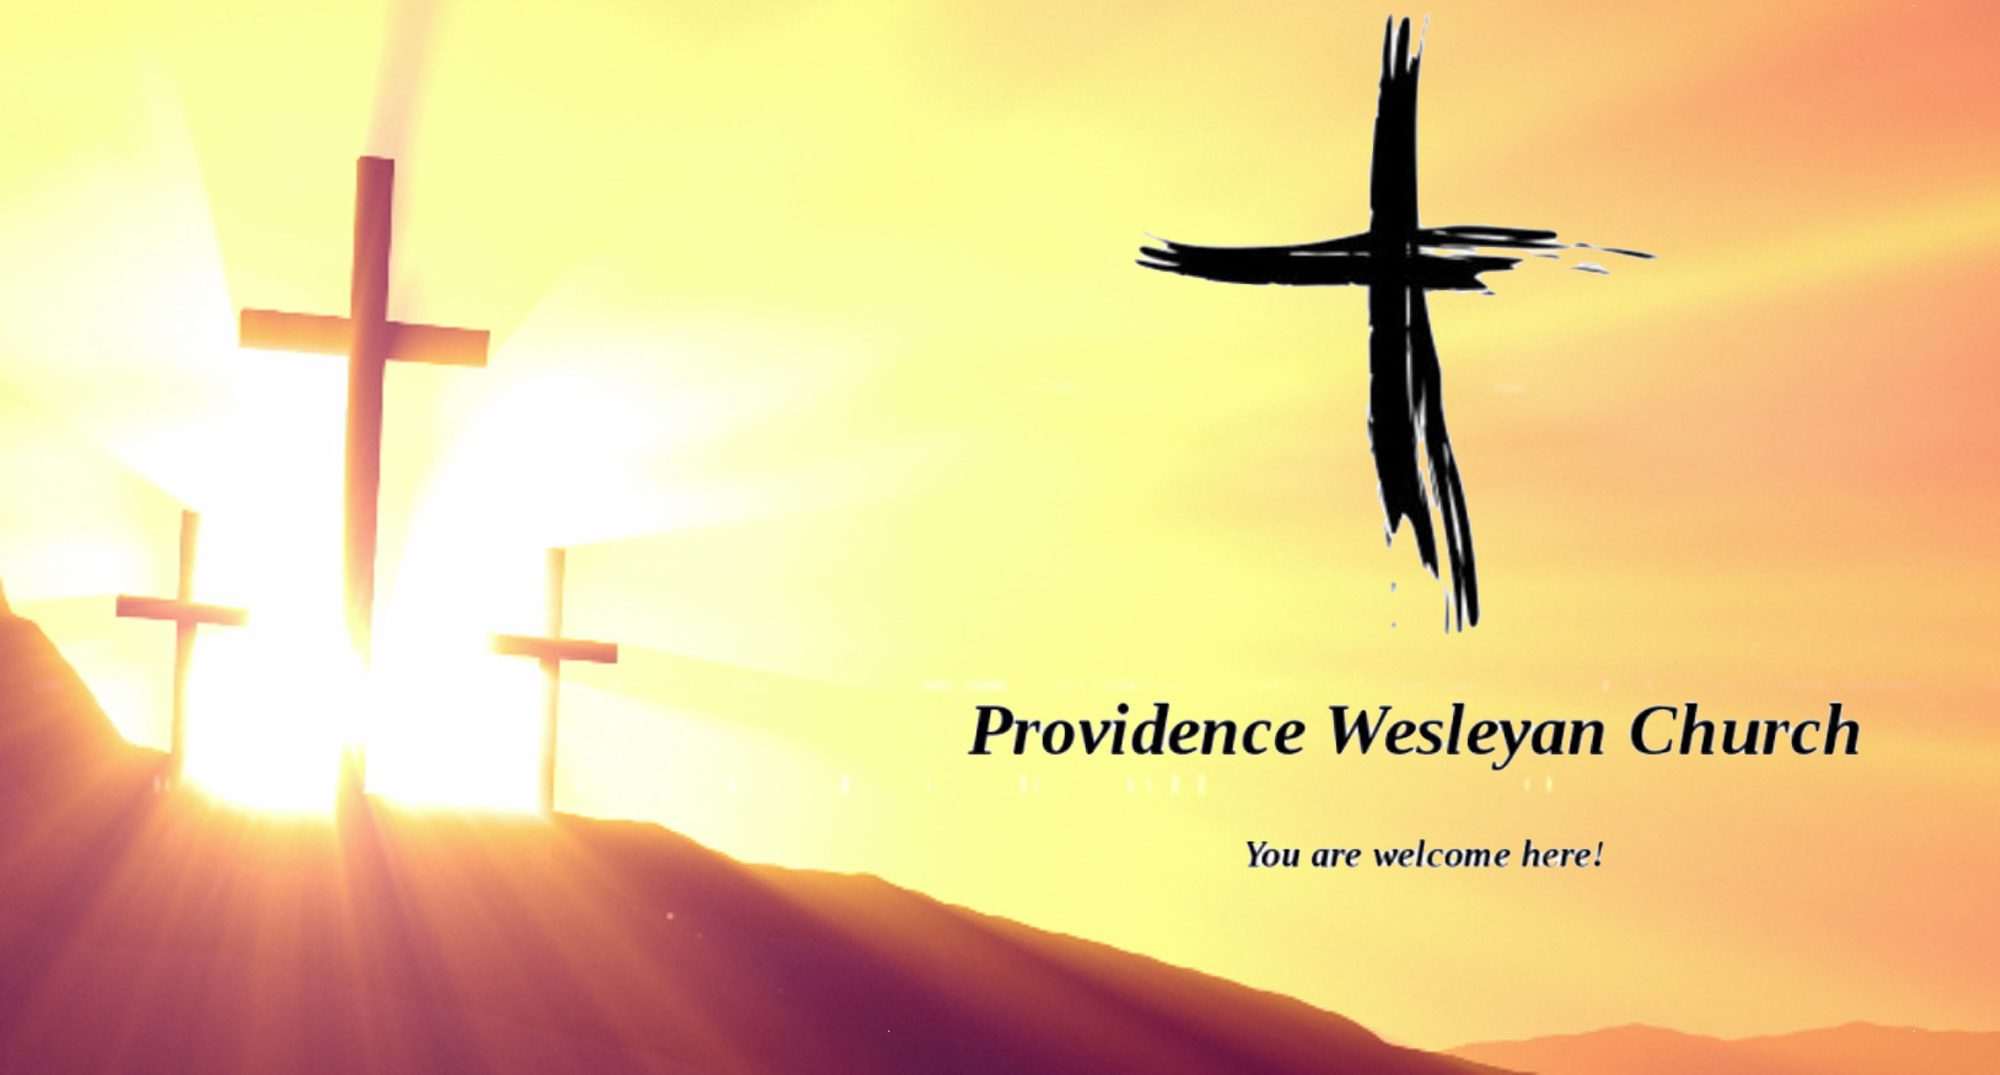 Providence Wesleyan Church